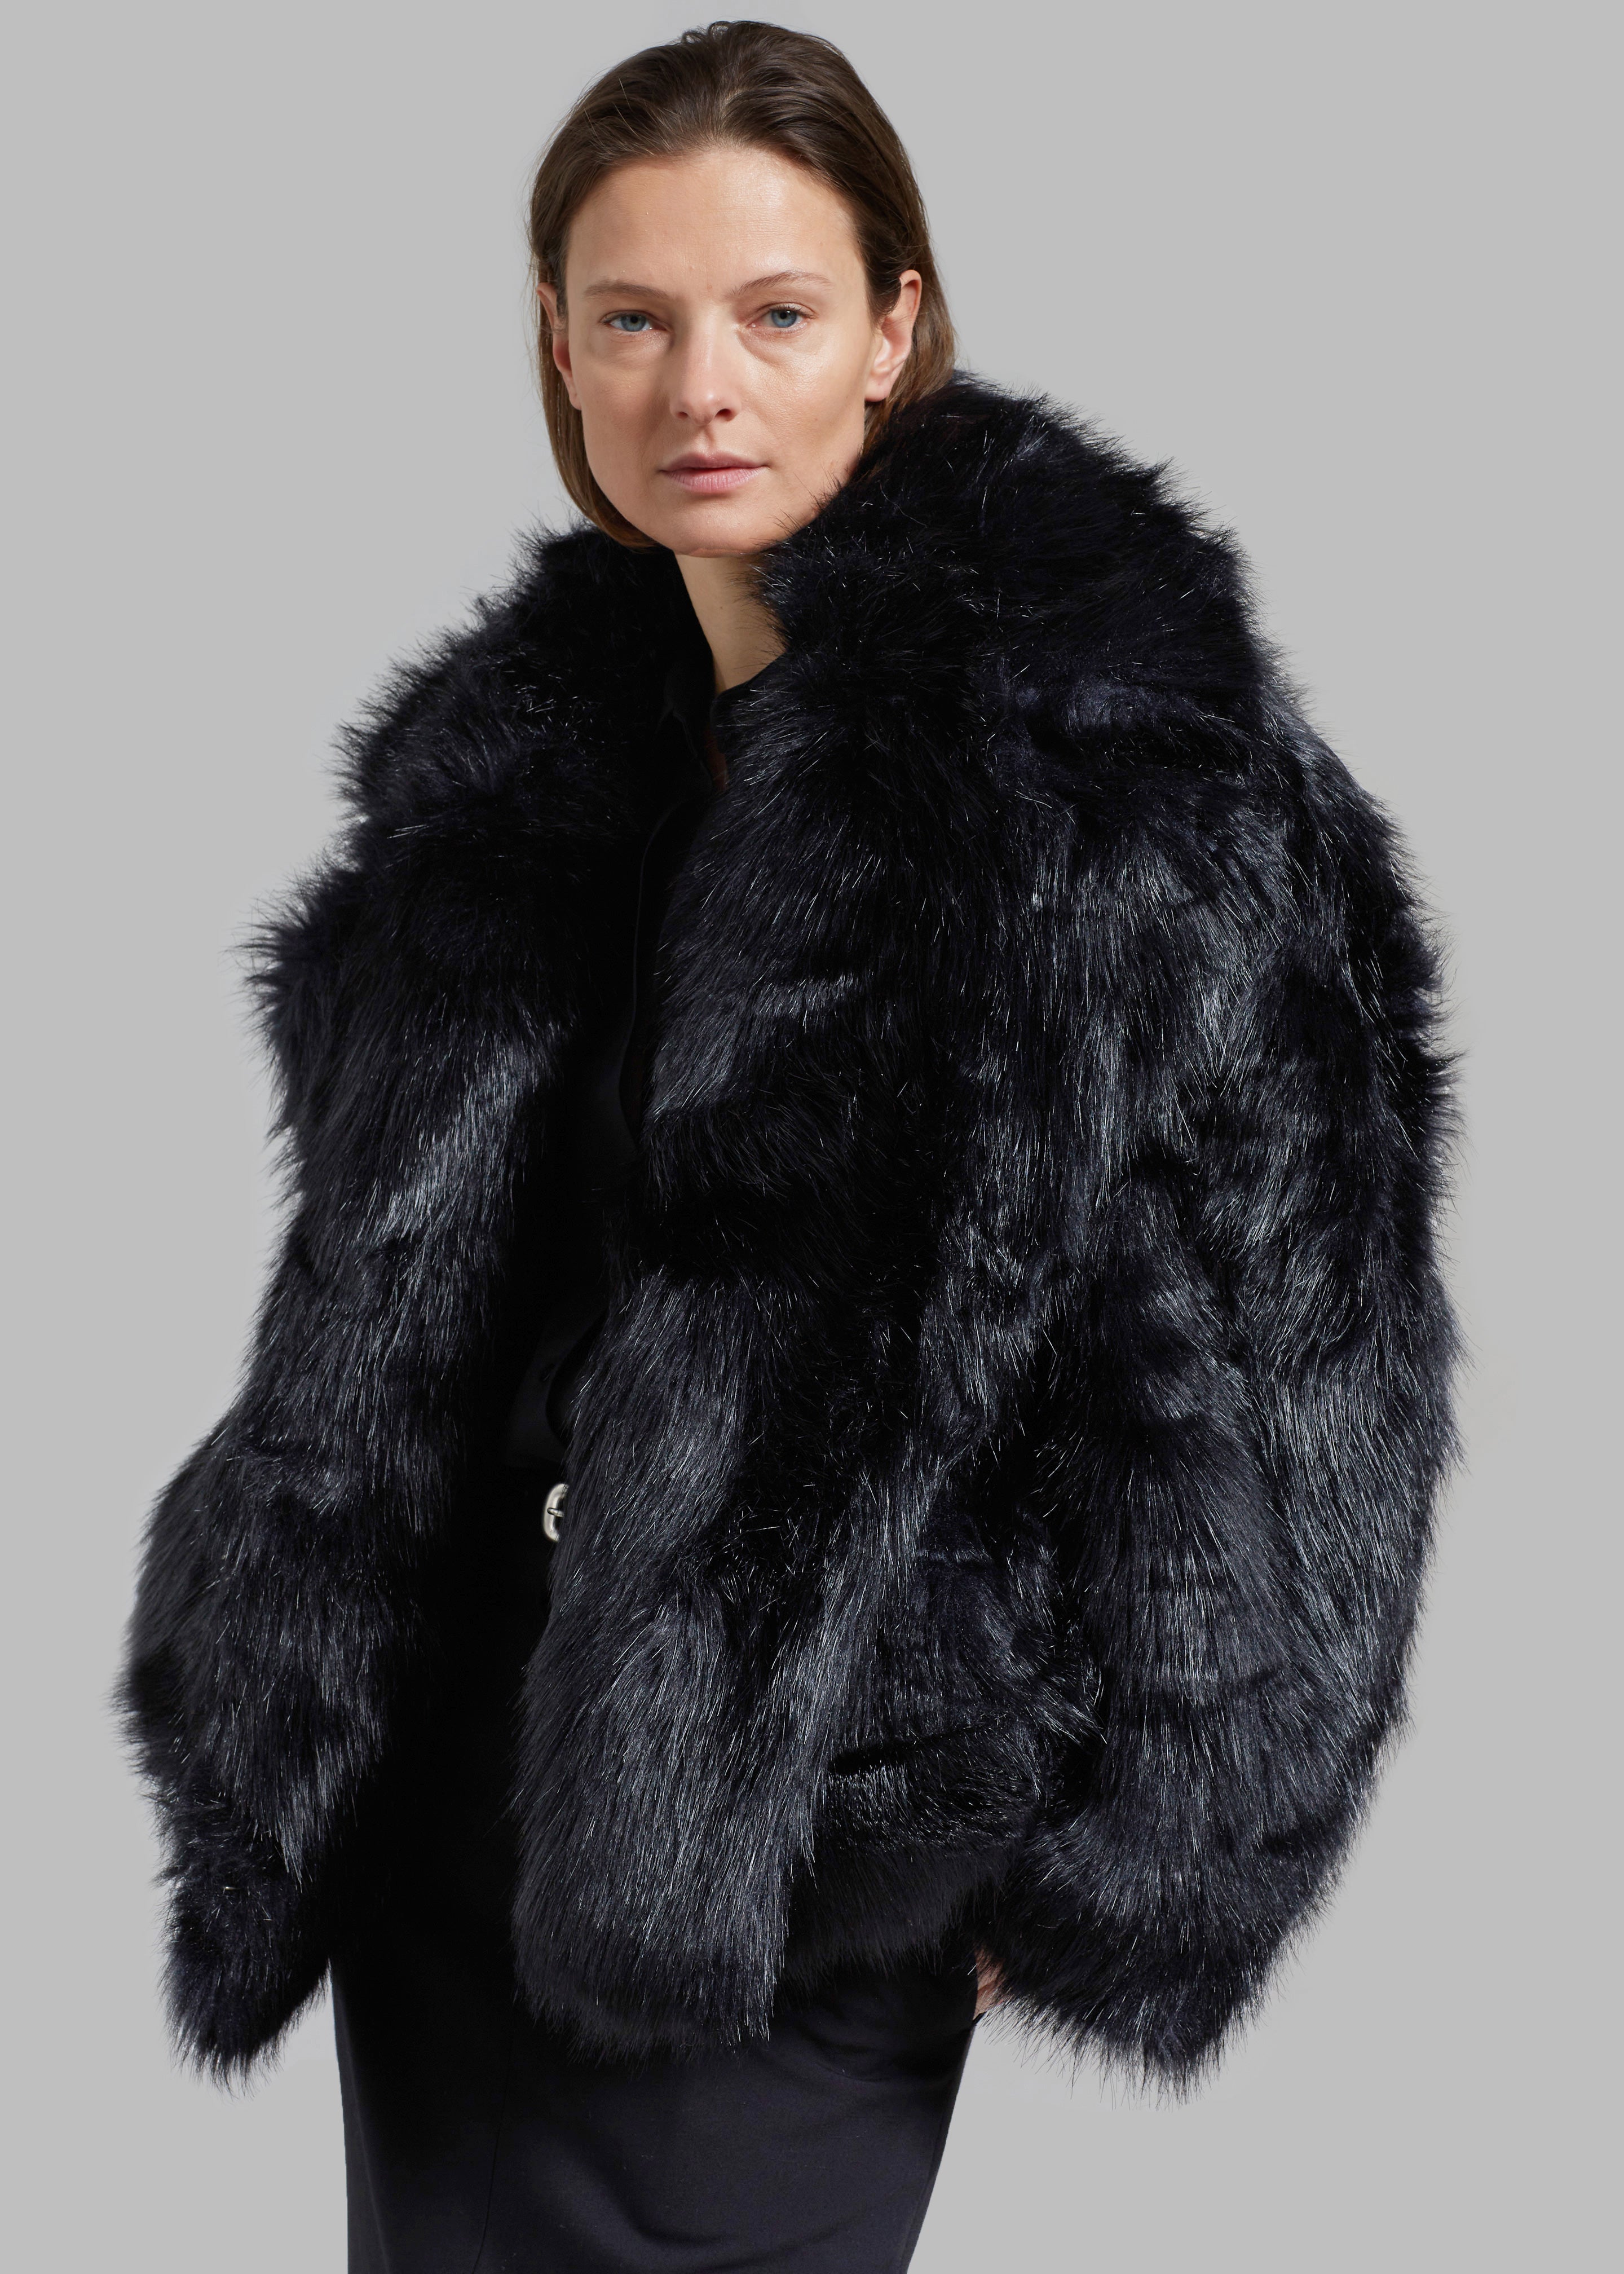 Short black faux fur coat